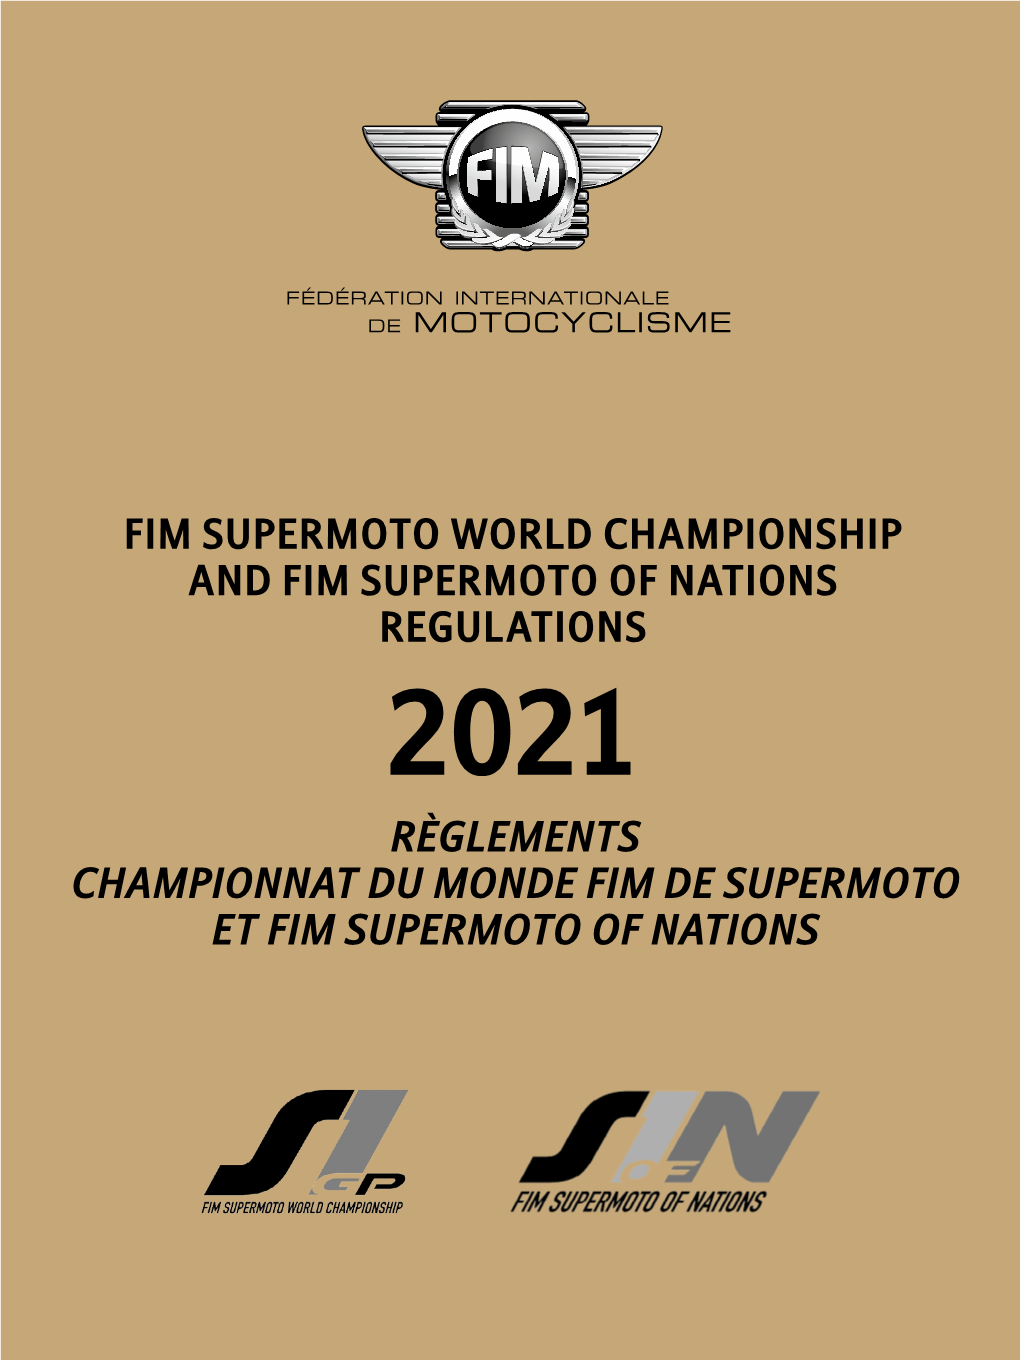 Fim Supermoto World Championship